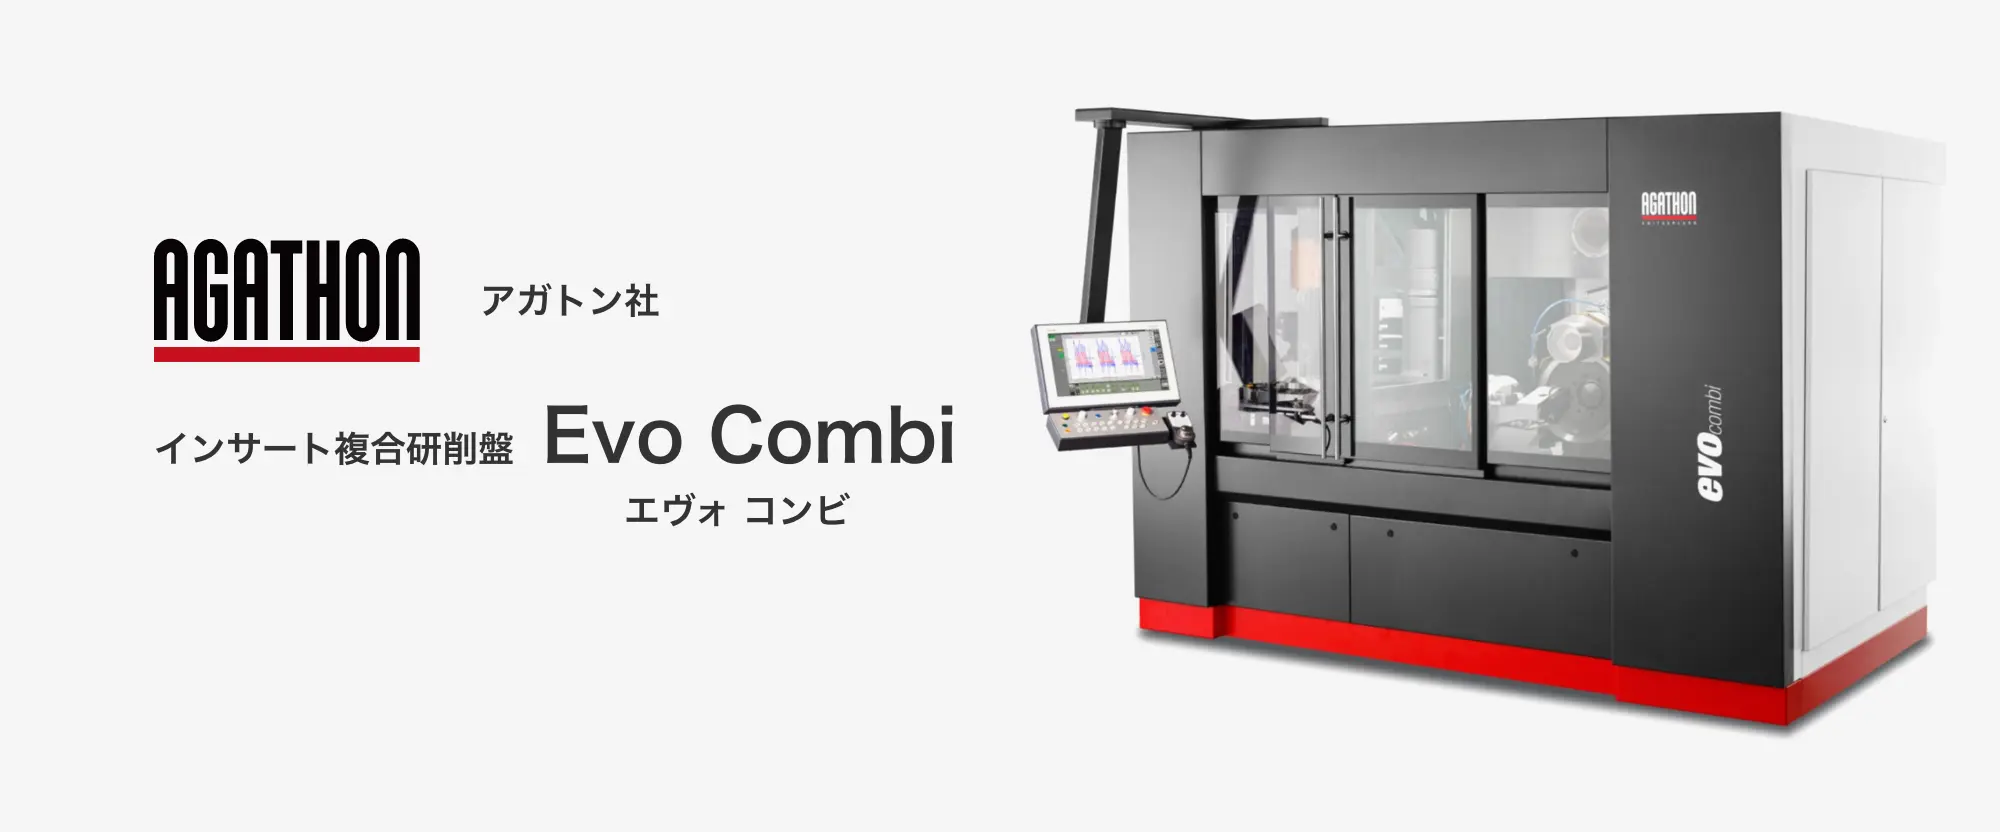 CNCインサート複合研削盤「Evo Combi」